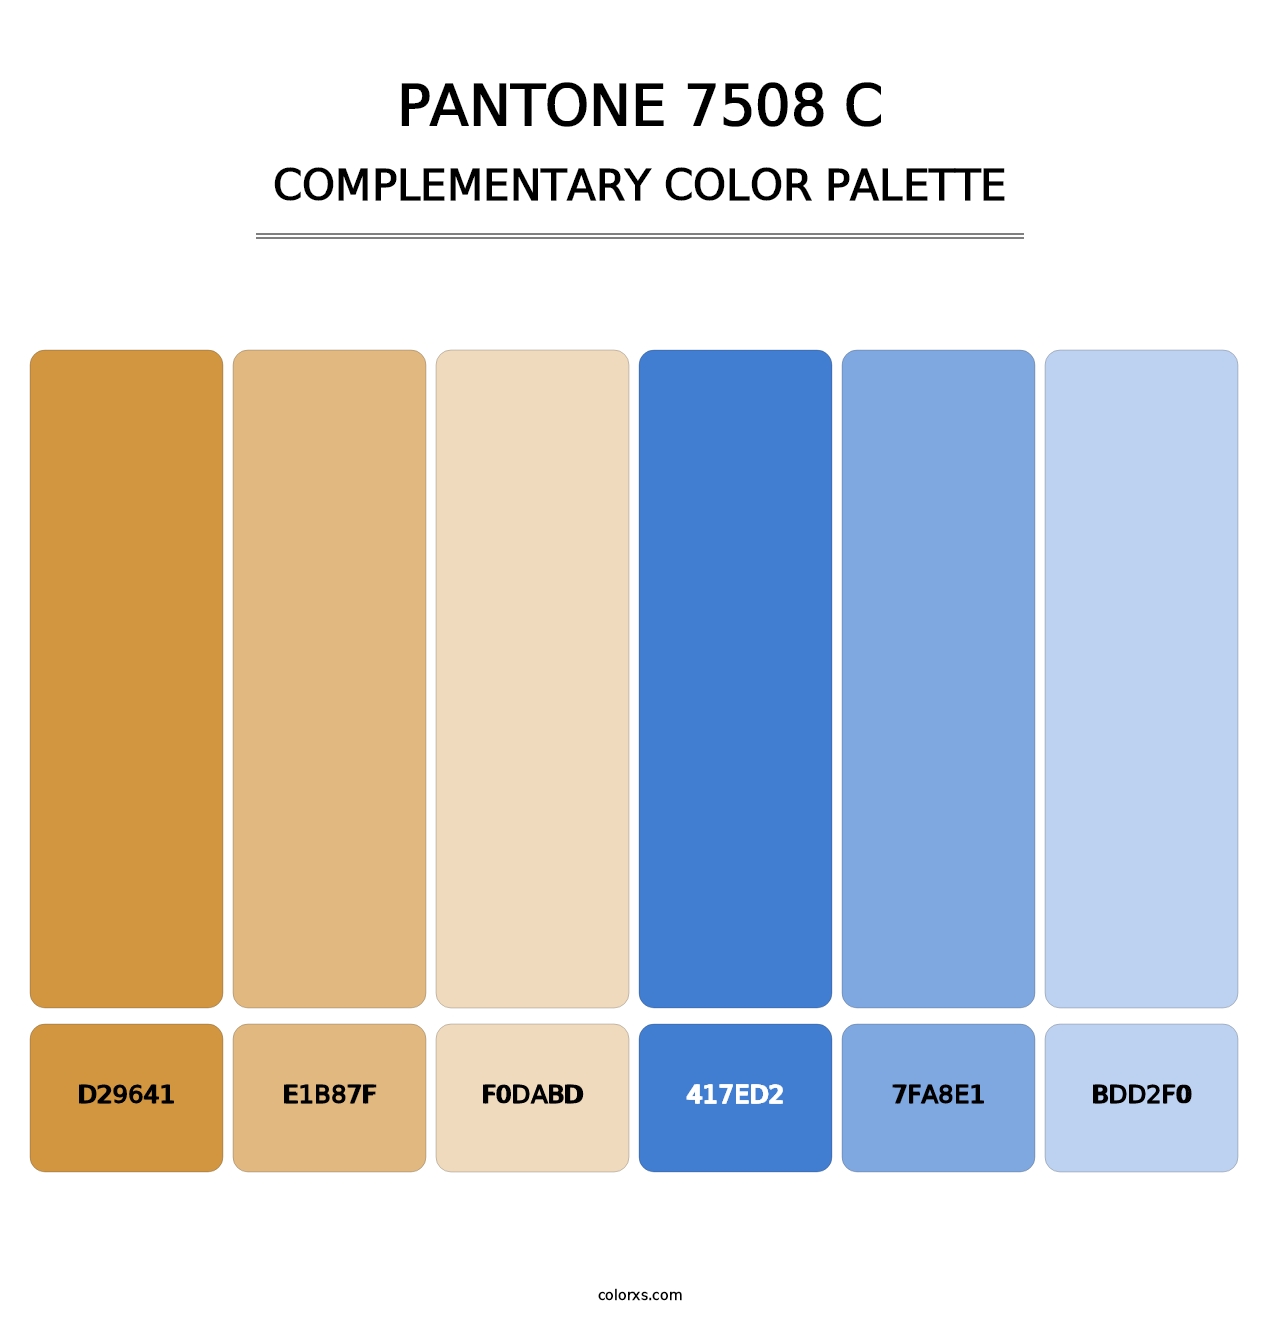 PANTONE 7508 C - Complementary Color Palette